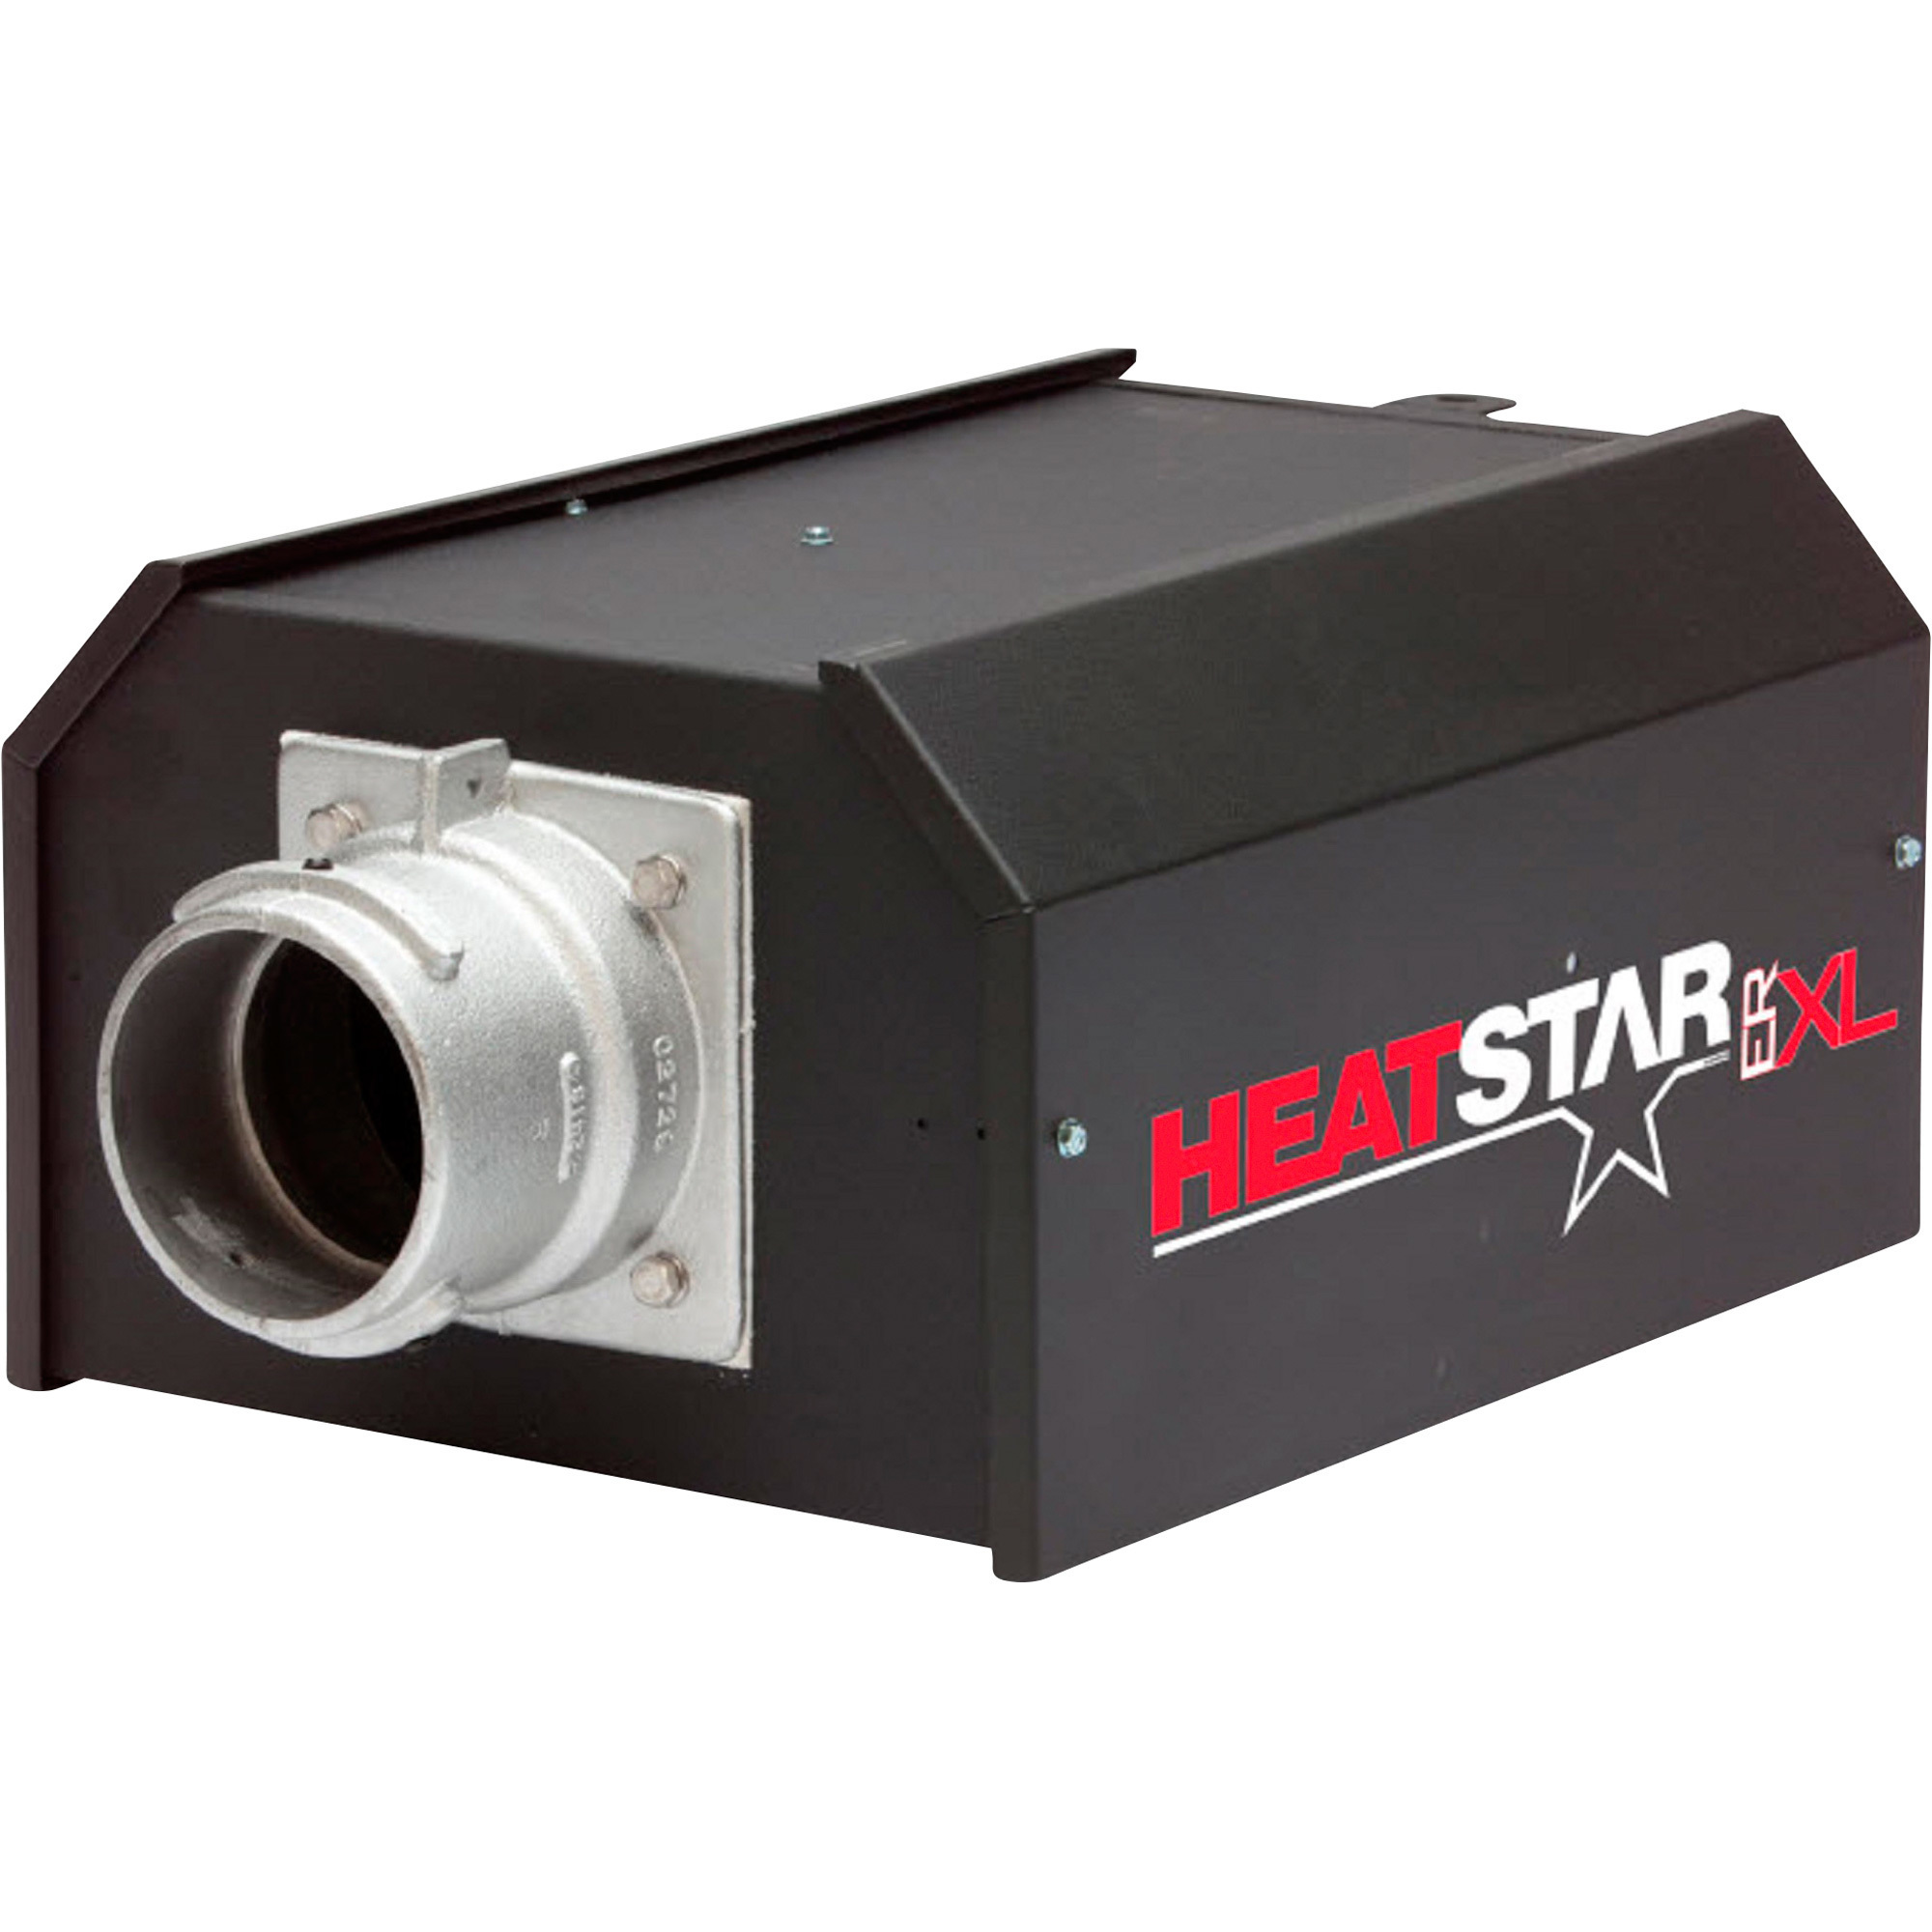 HeatStar Dual Fuel Low-Intensity Radiant Tube Heater, 175,000 BTU, Natural Gas or Propane, Model ERXL175N